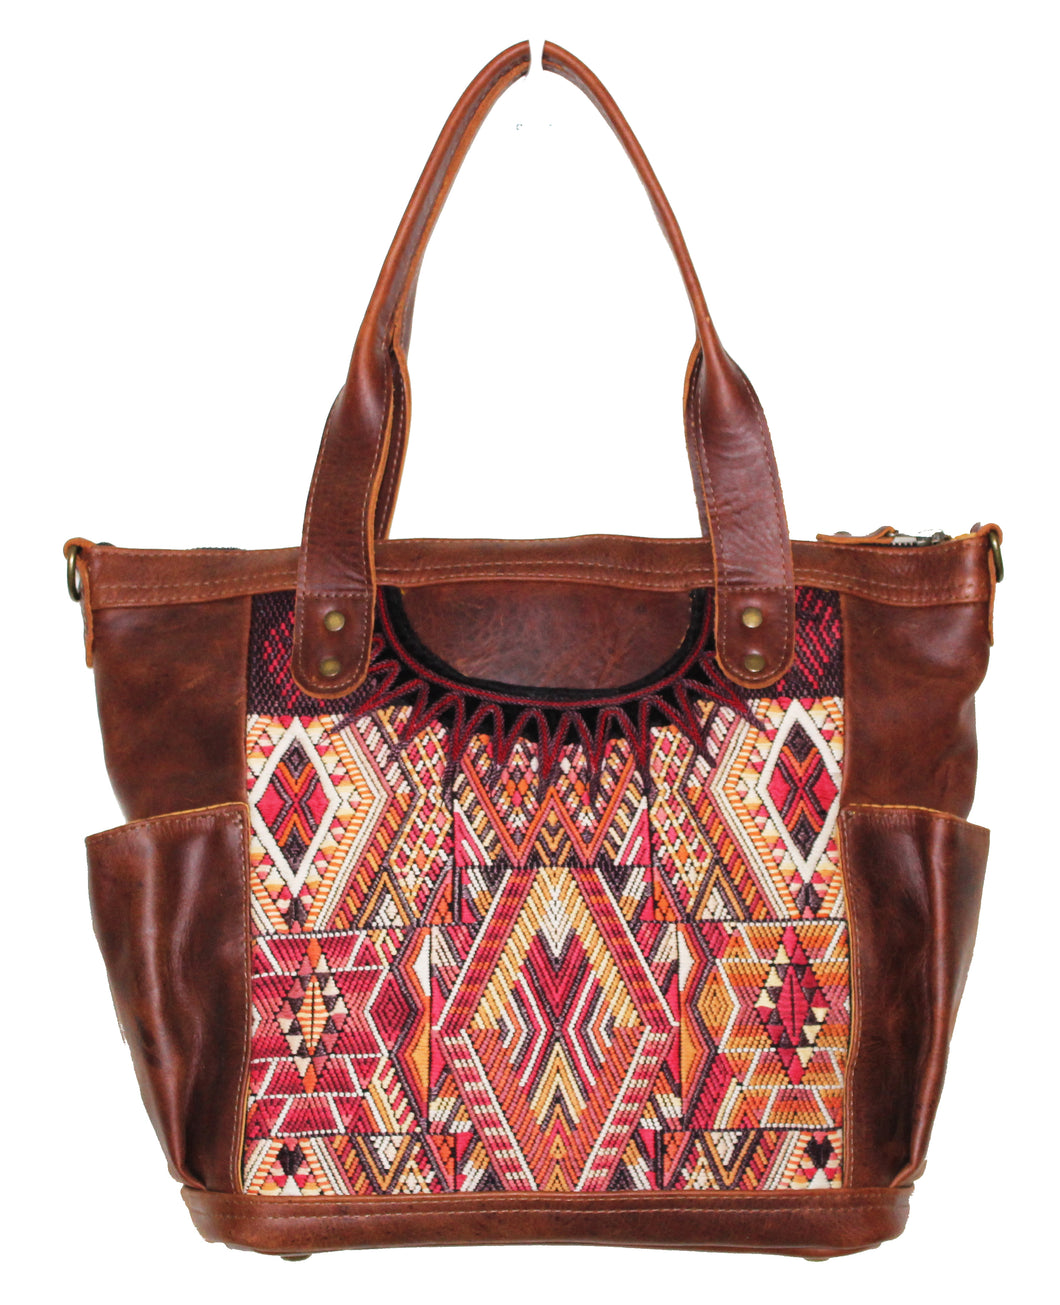 MoonLake Designs Elena medium convertible day bag in dark tan leather with mayan handwoven huipil in sunset colors